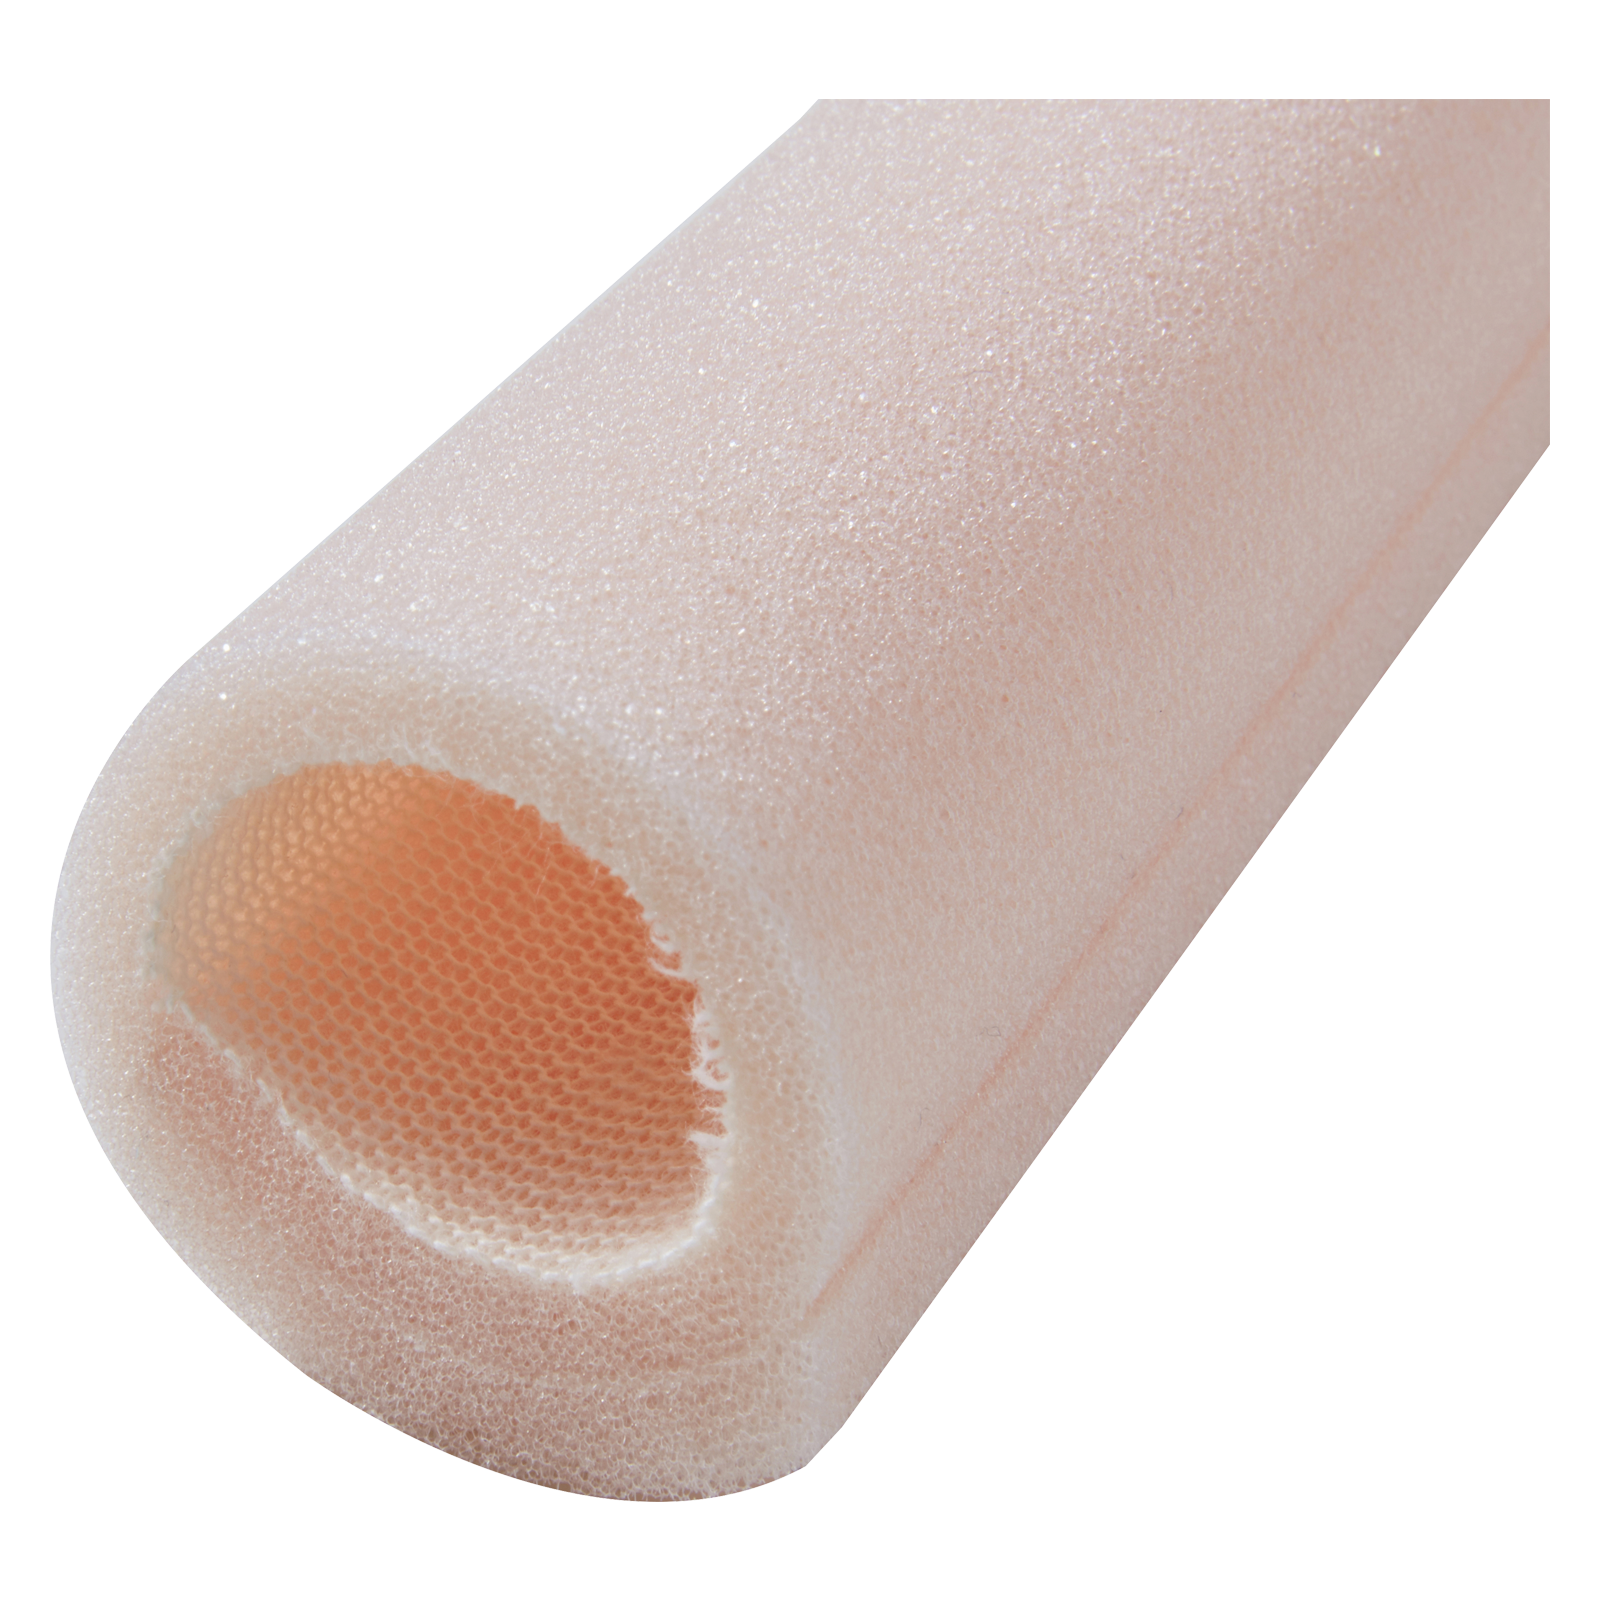 Tubifoam Zehenschutzschlauch, 12 Stück à 25 cm, Gr. 3, Ø 18 mm, überlappend